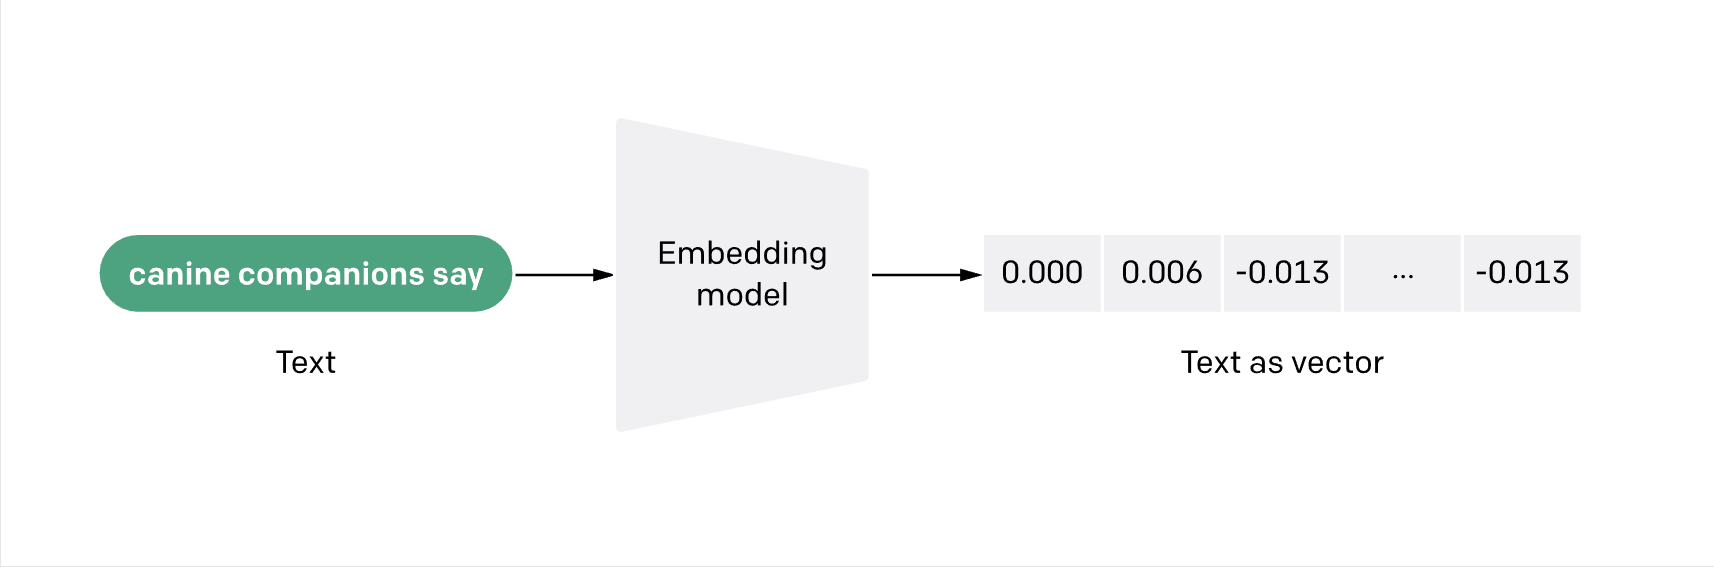 Vector Embeddings